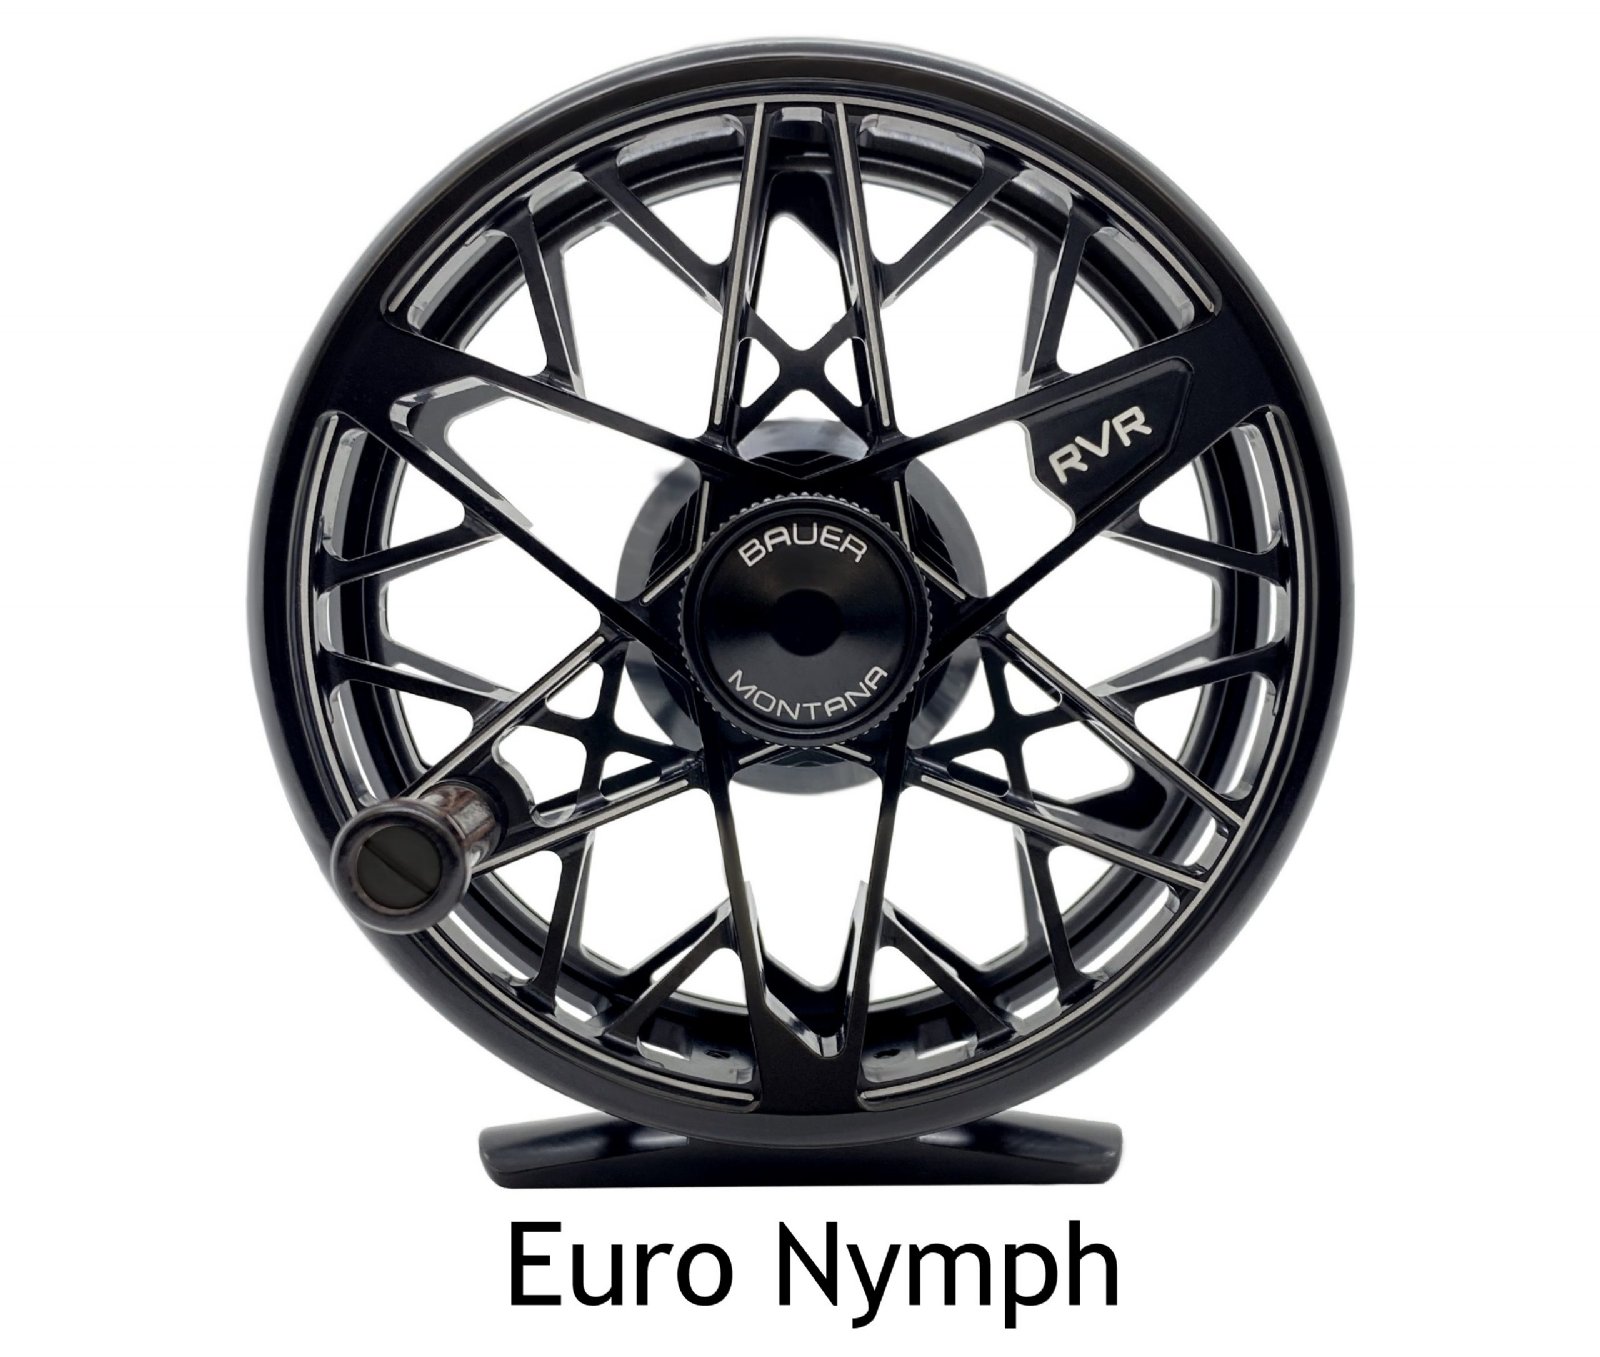 Bauer RVR Euro-Nymph Fly Reels